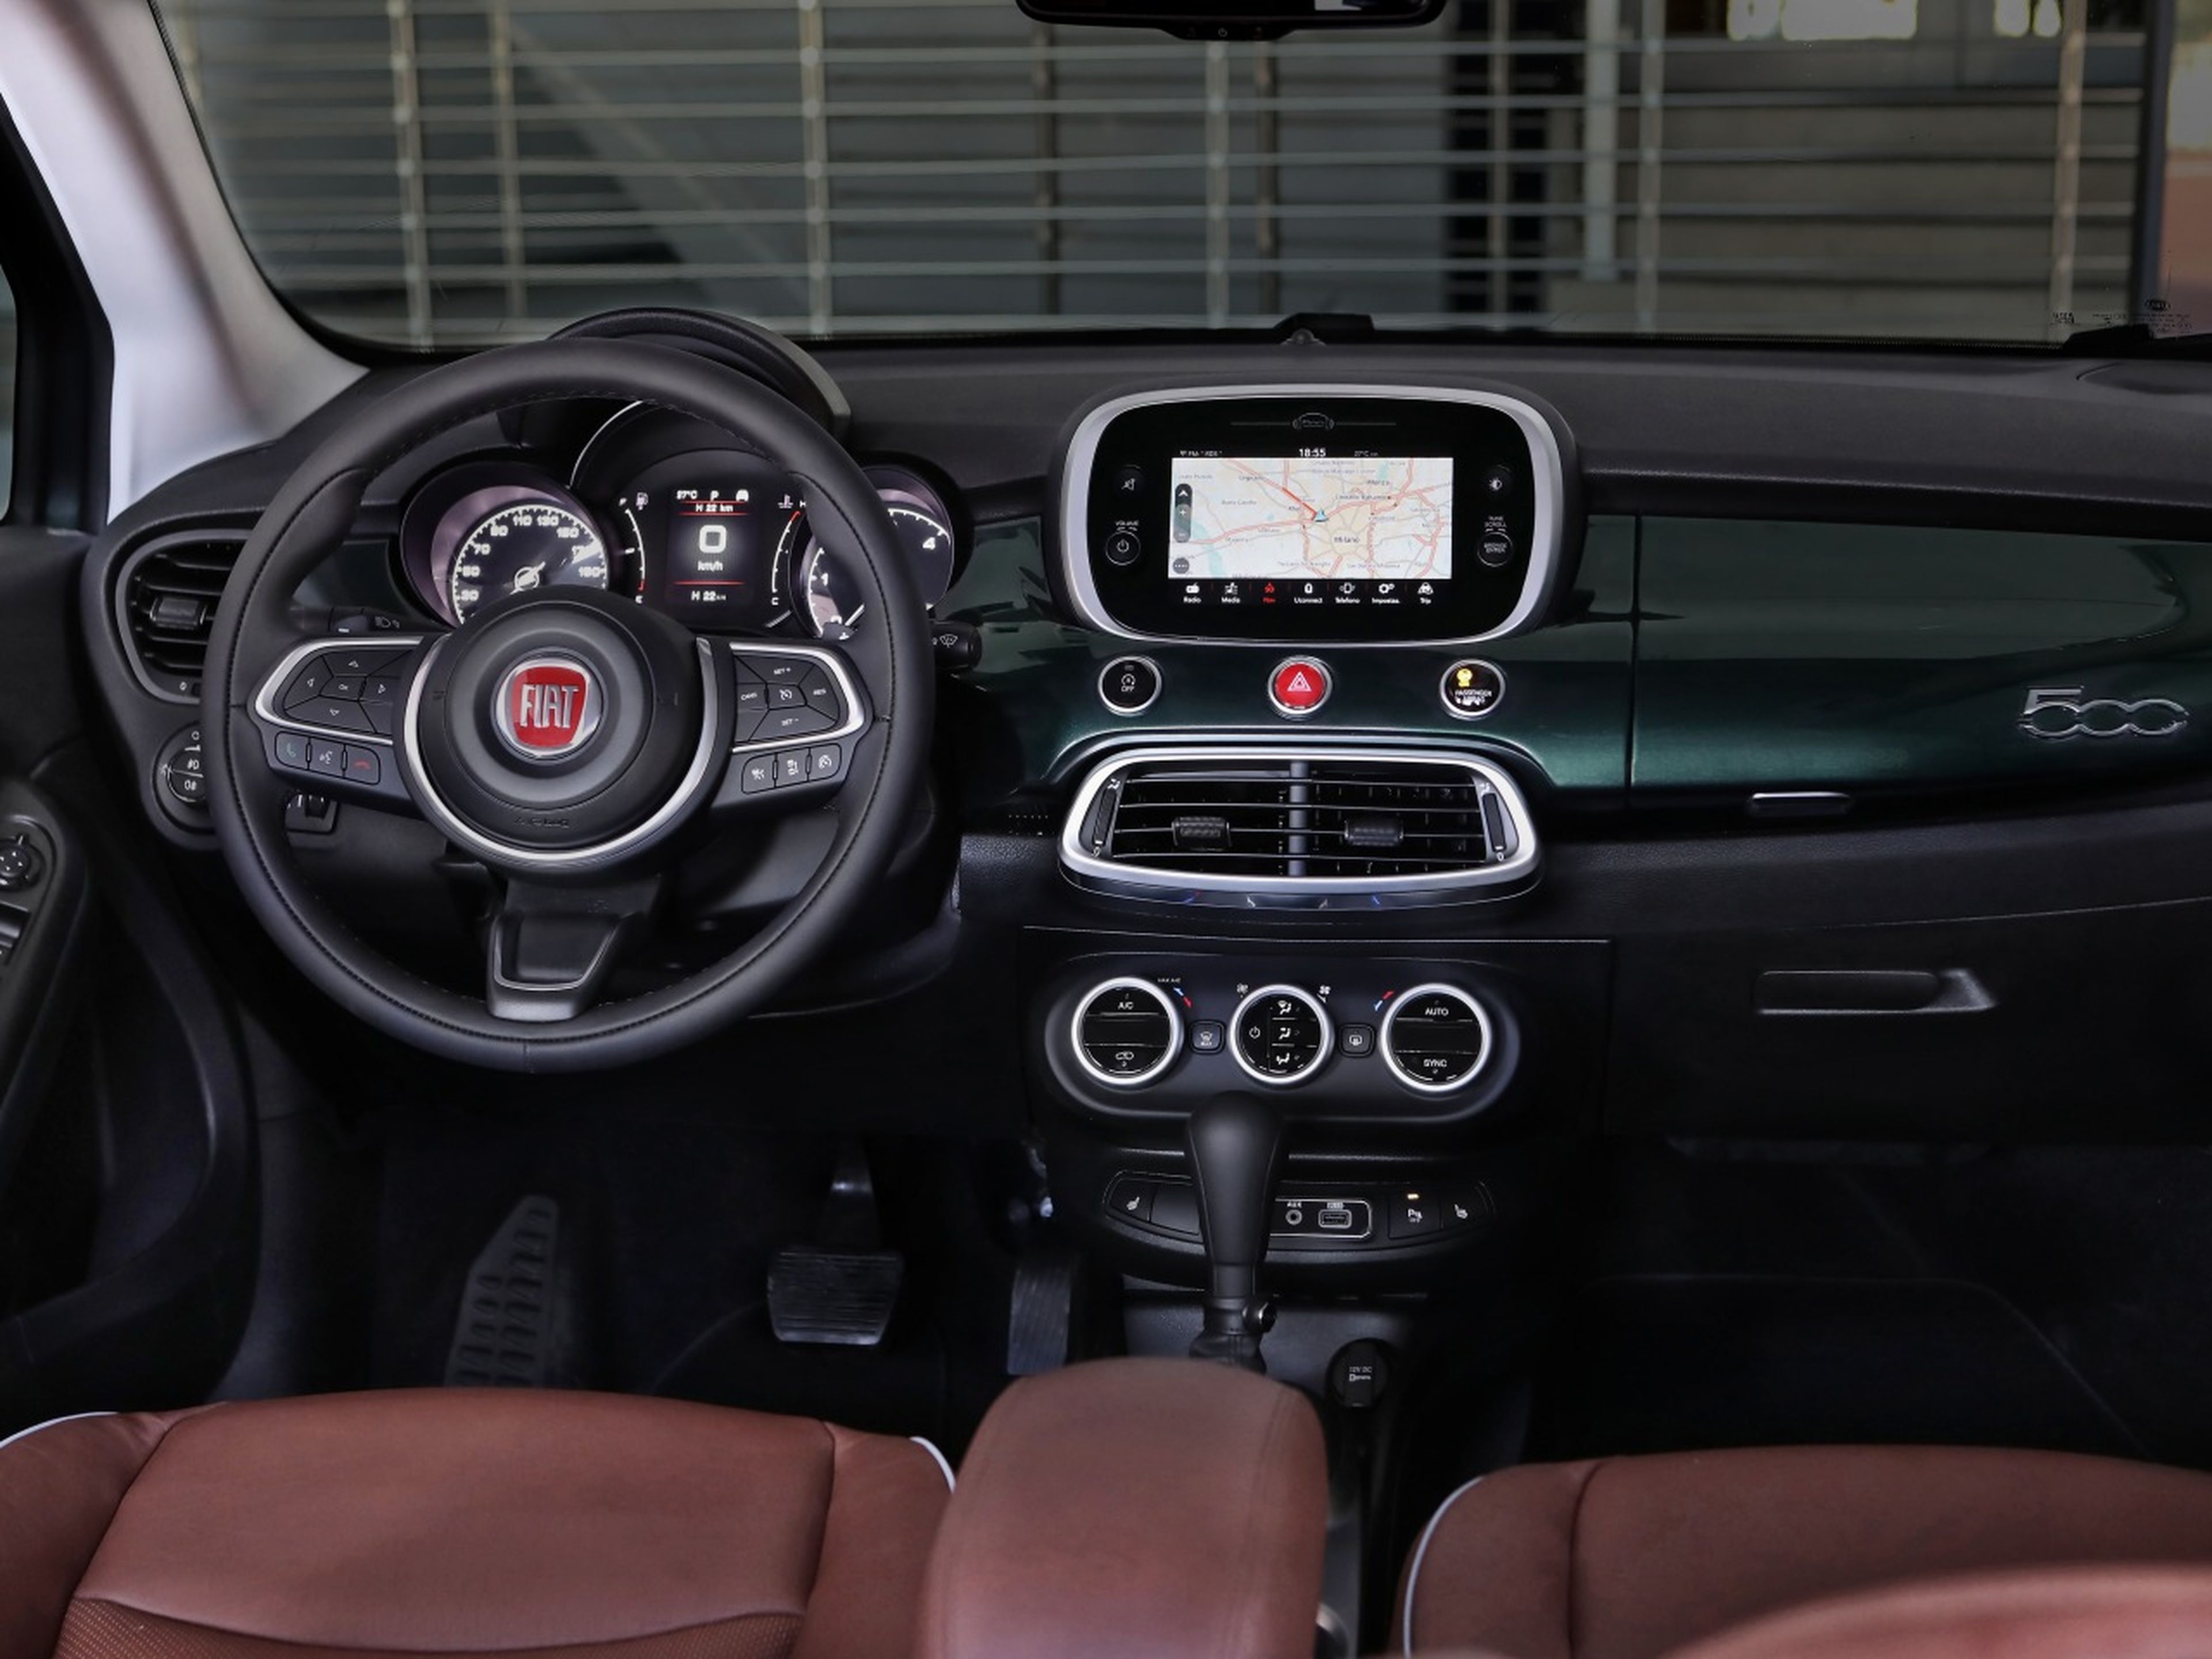 Nuevo FIAT 500 interior